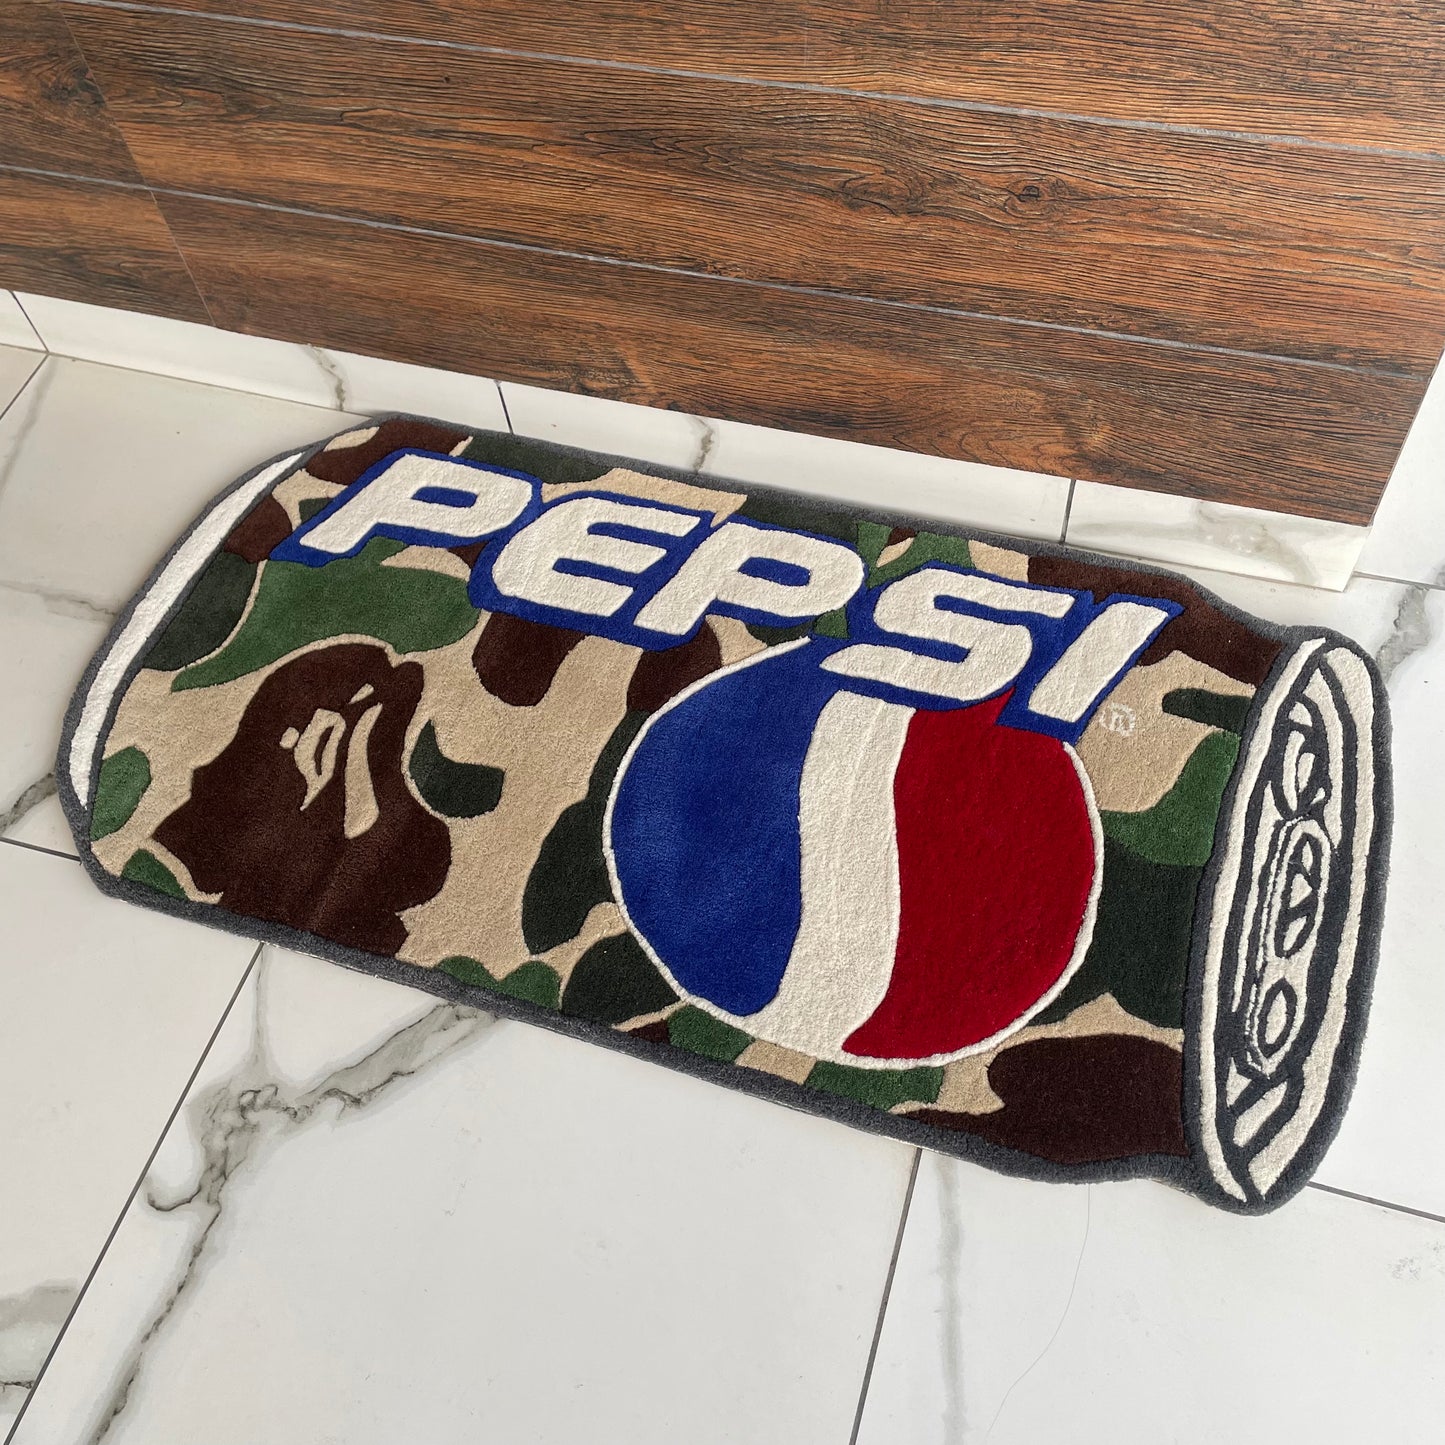 Pepsi x Aape Hand-Tufted Rug